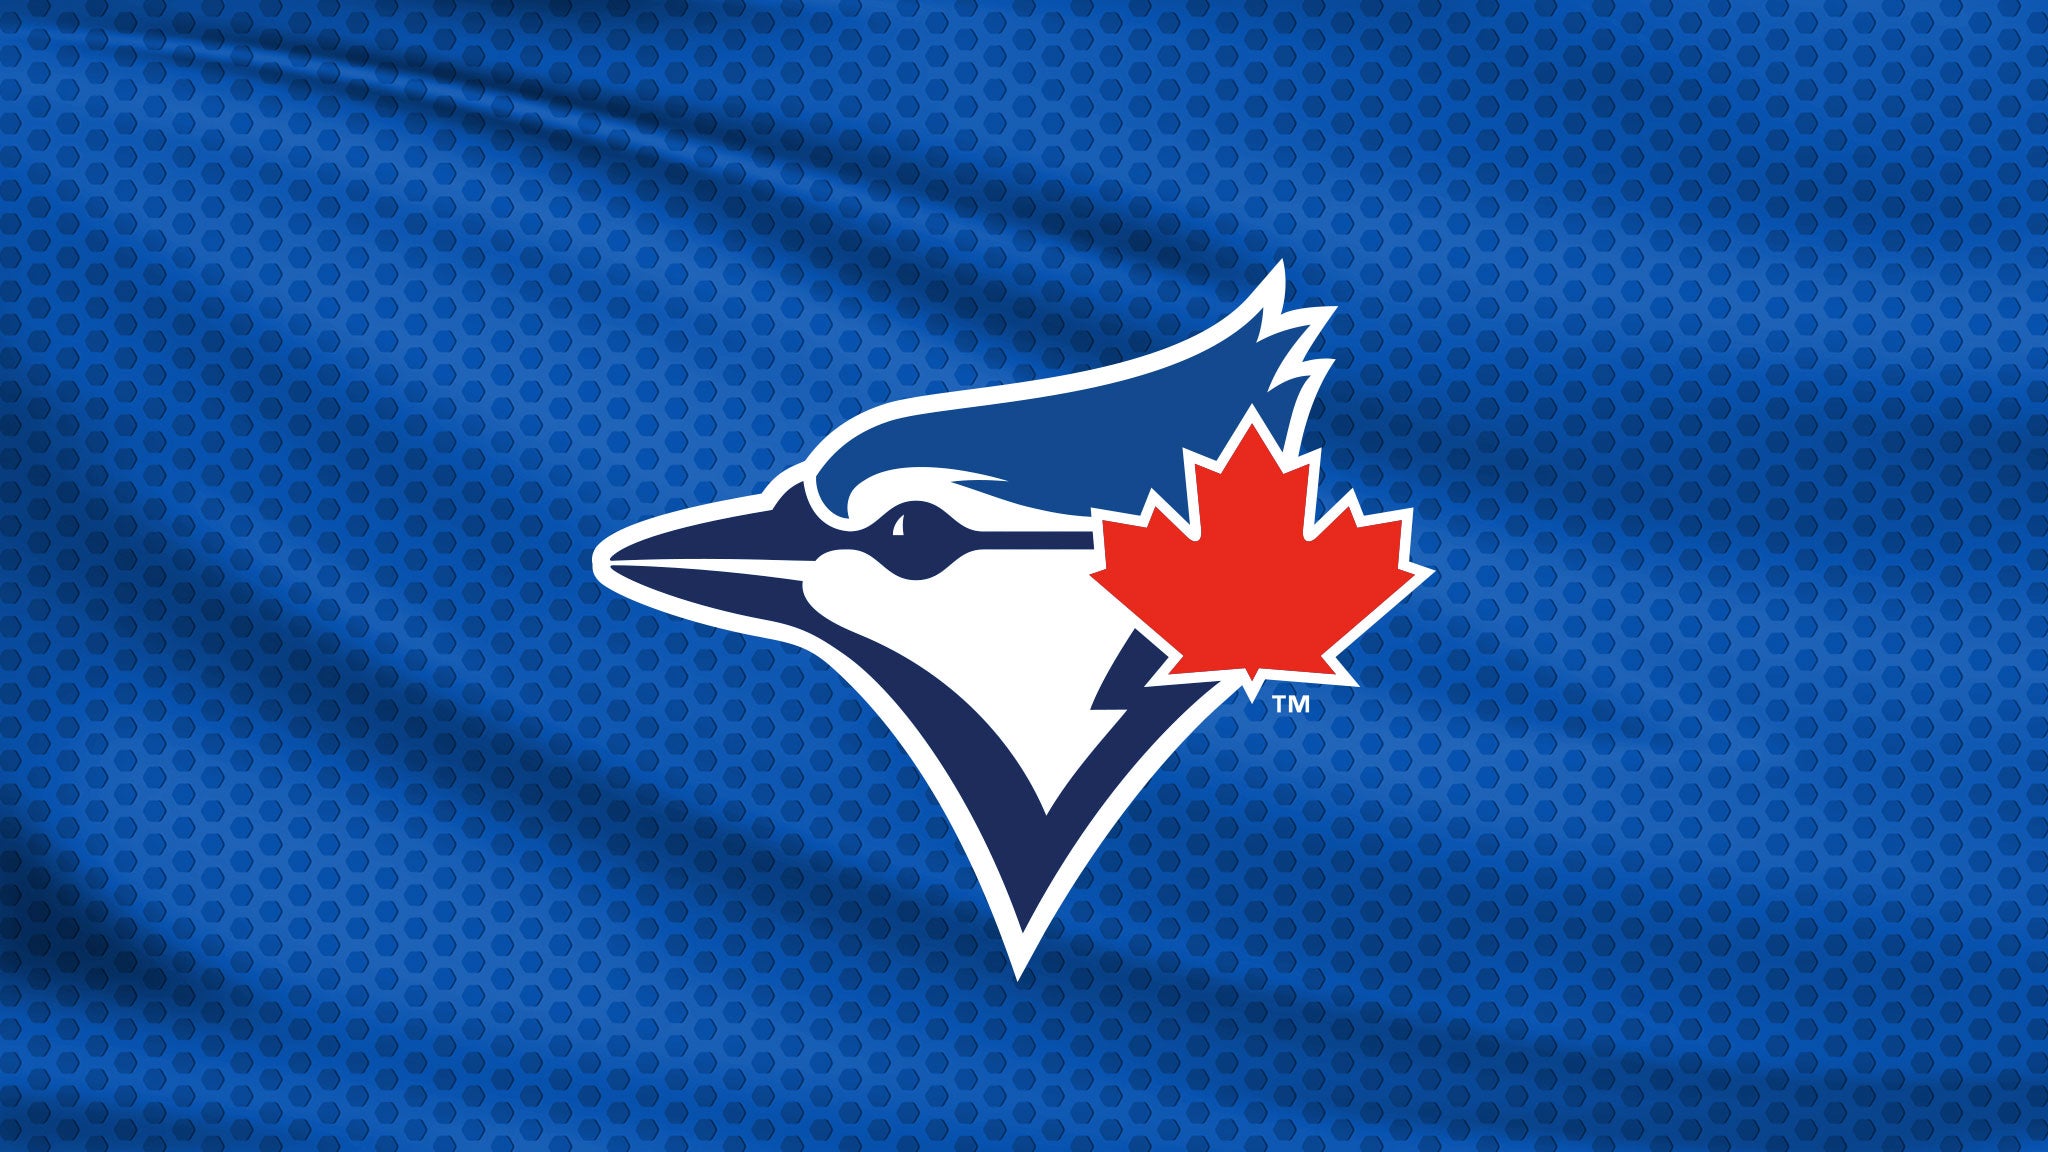 Toronto Blue Jays vs. St. Louis Cardinals presales in Toronto